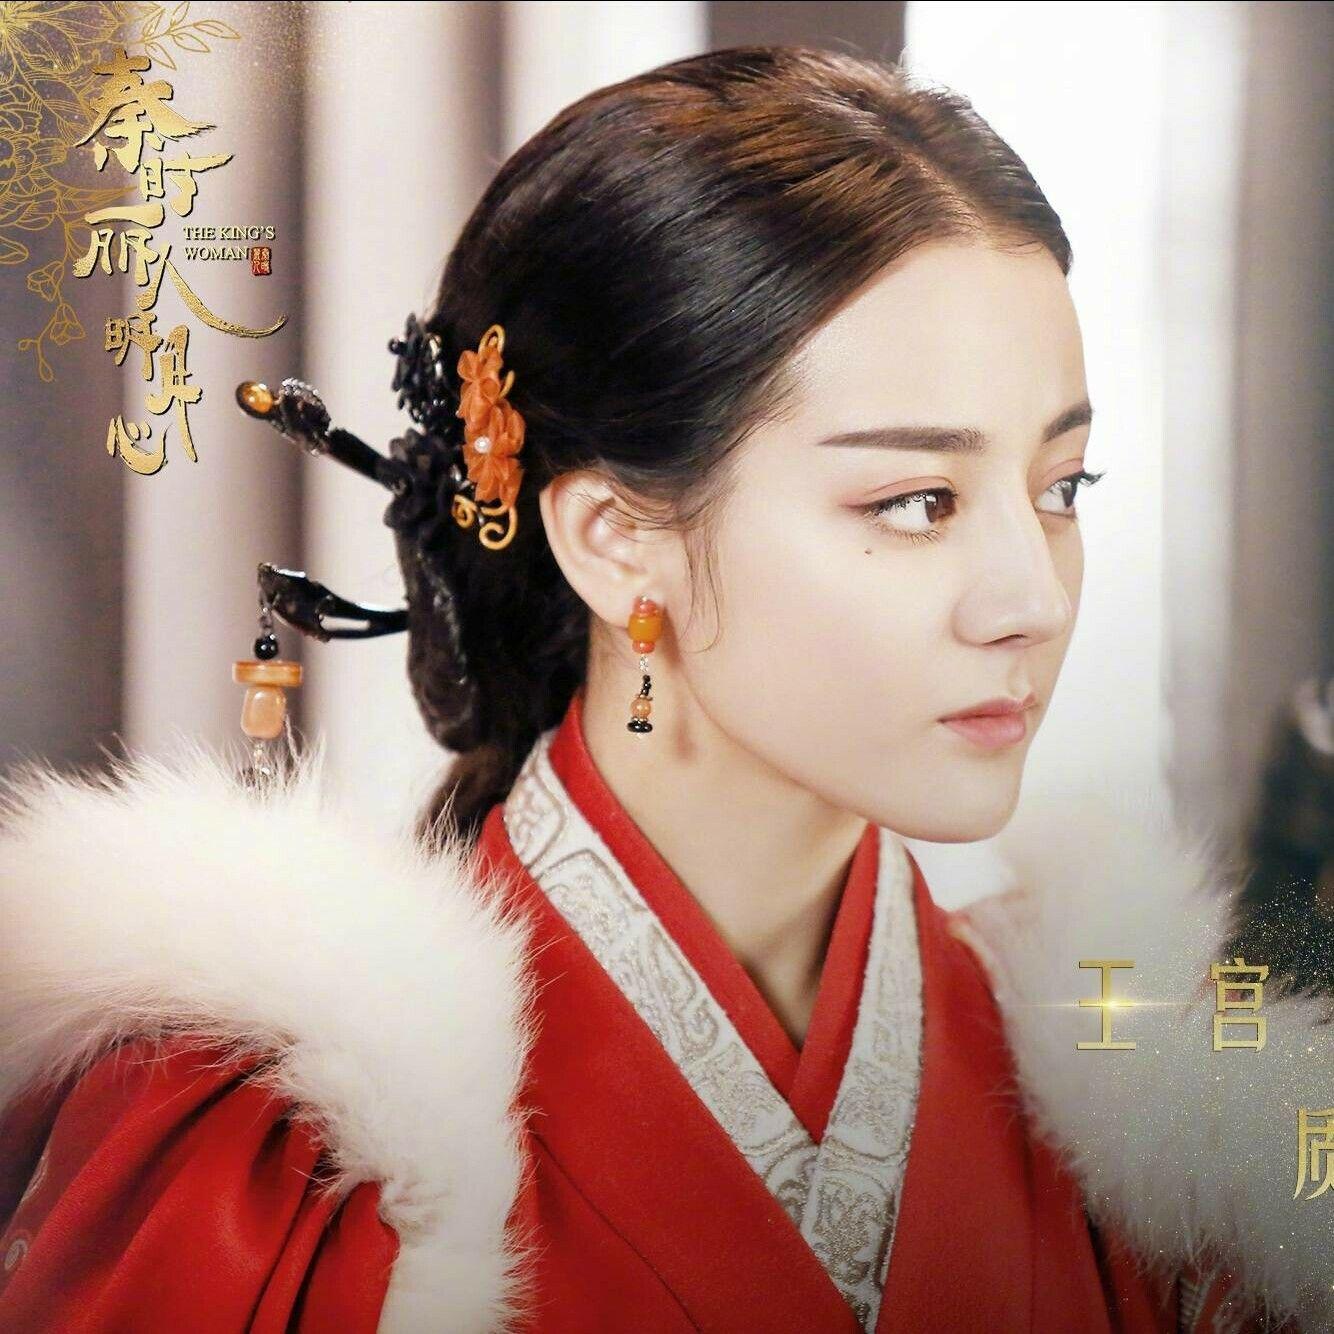 The King's Woman《丽姬传》 Dilmurat, Zhang Bin Bin